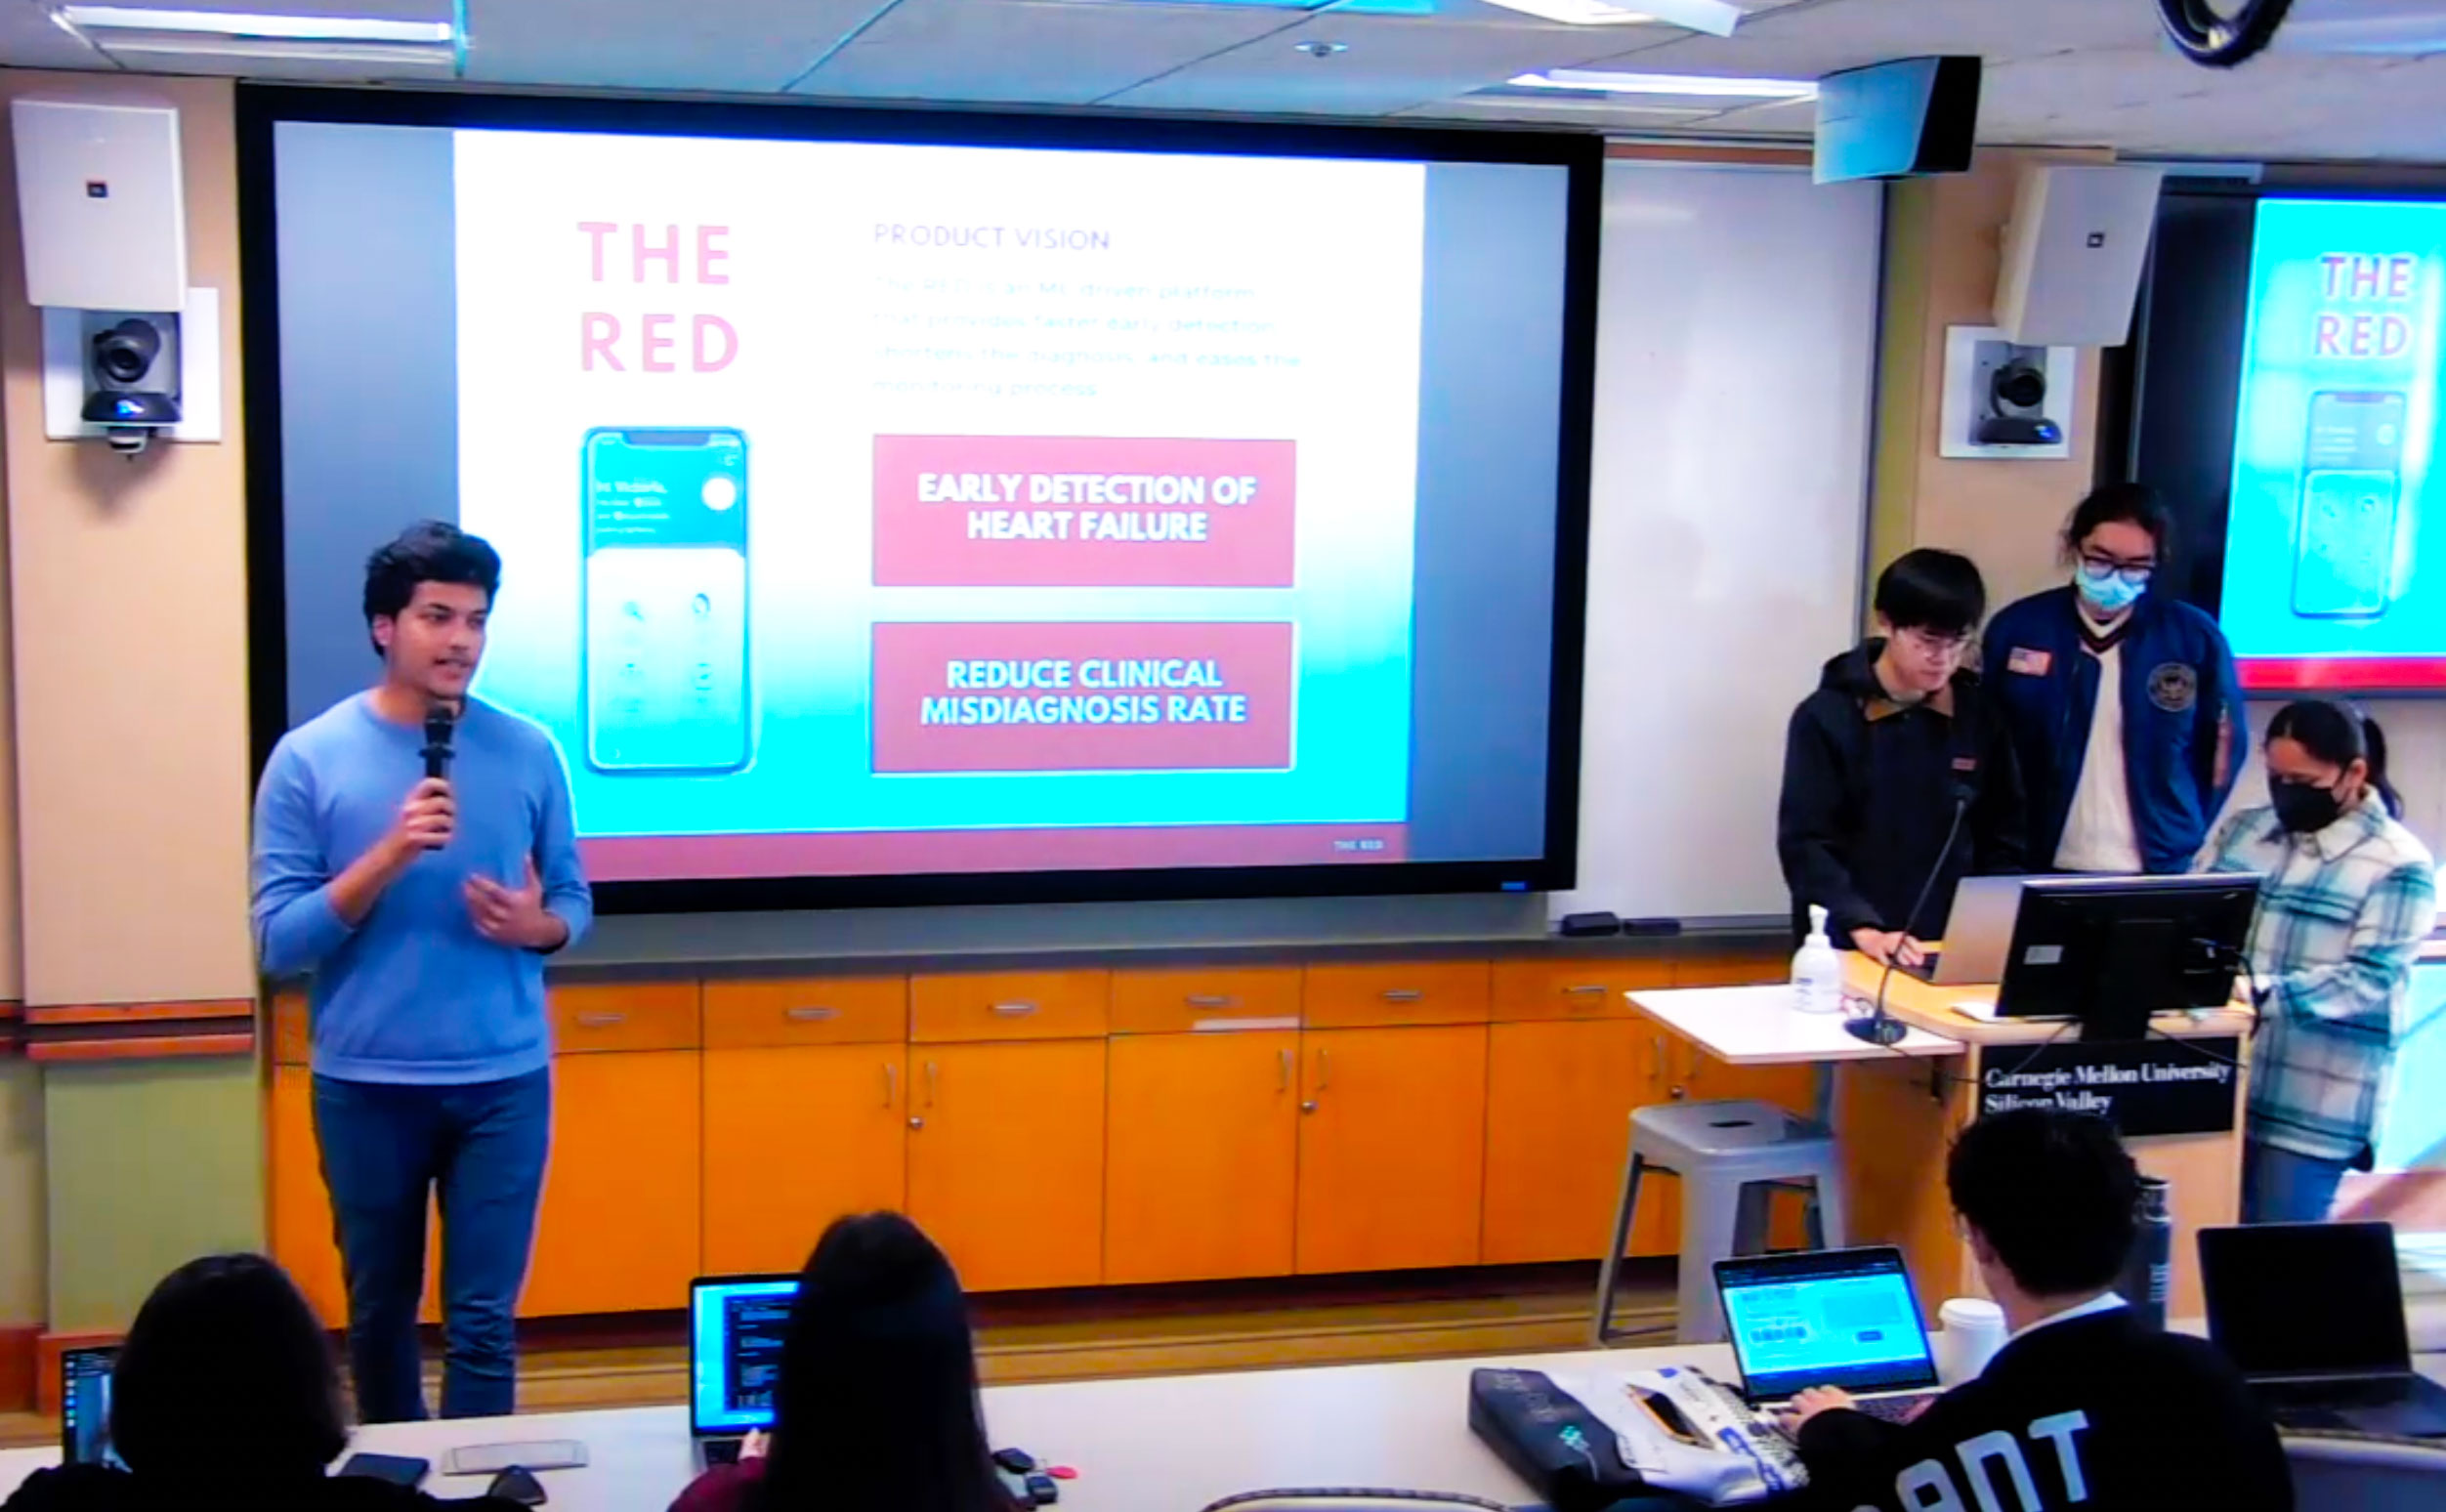 utkarsh the red presentation in classroom